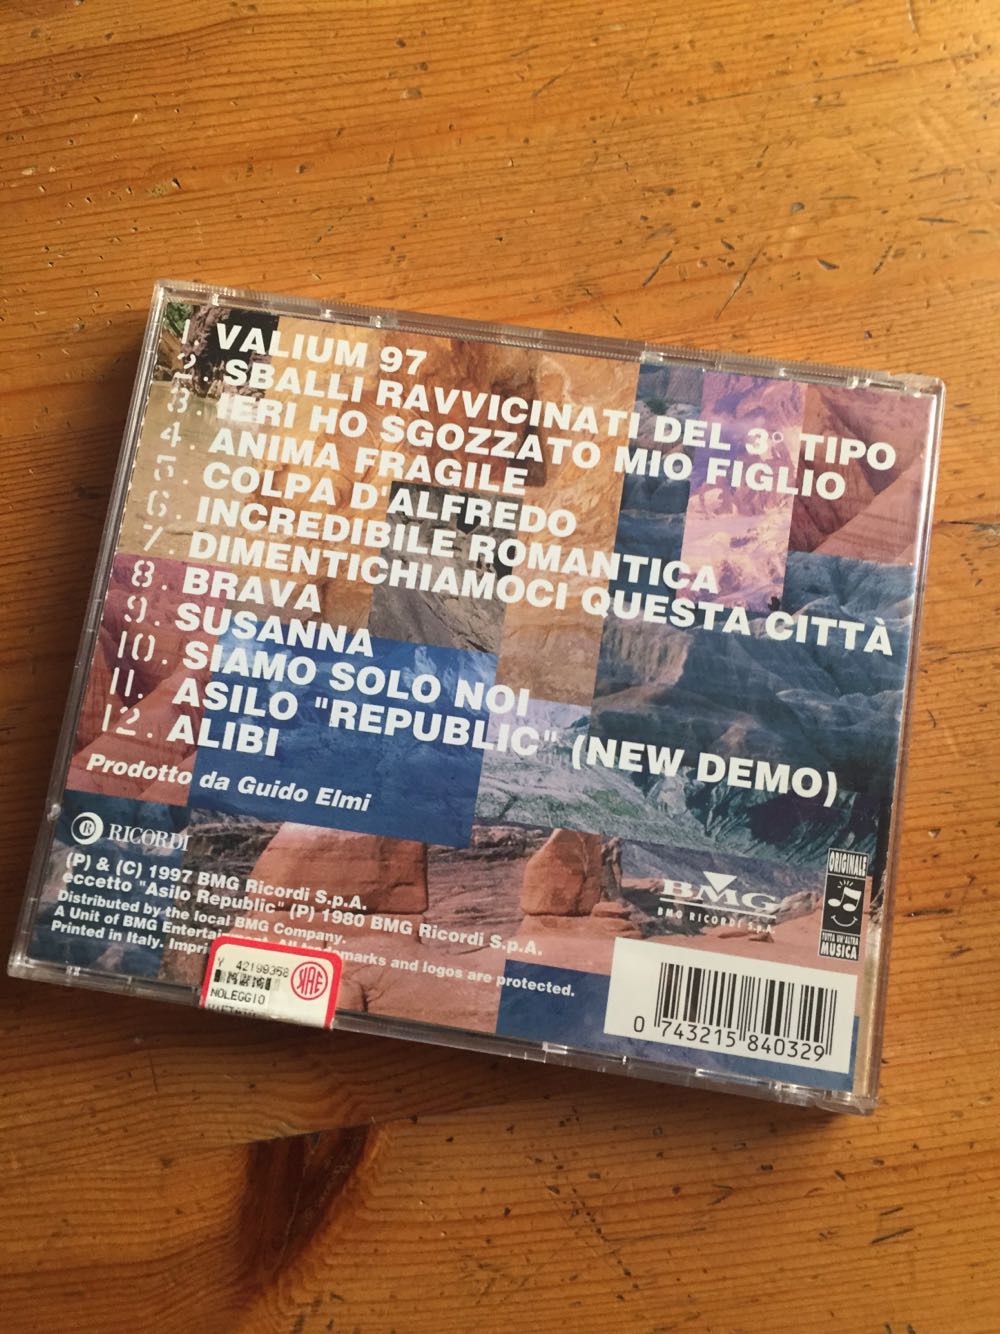 Rock - Vasco Rossi (CD) music collectible [Barcode 743215840329] - Main Image 3